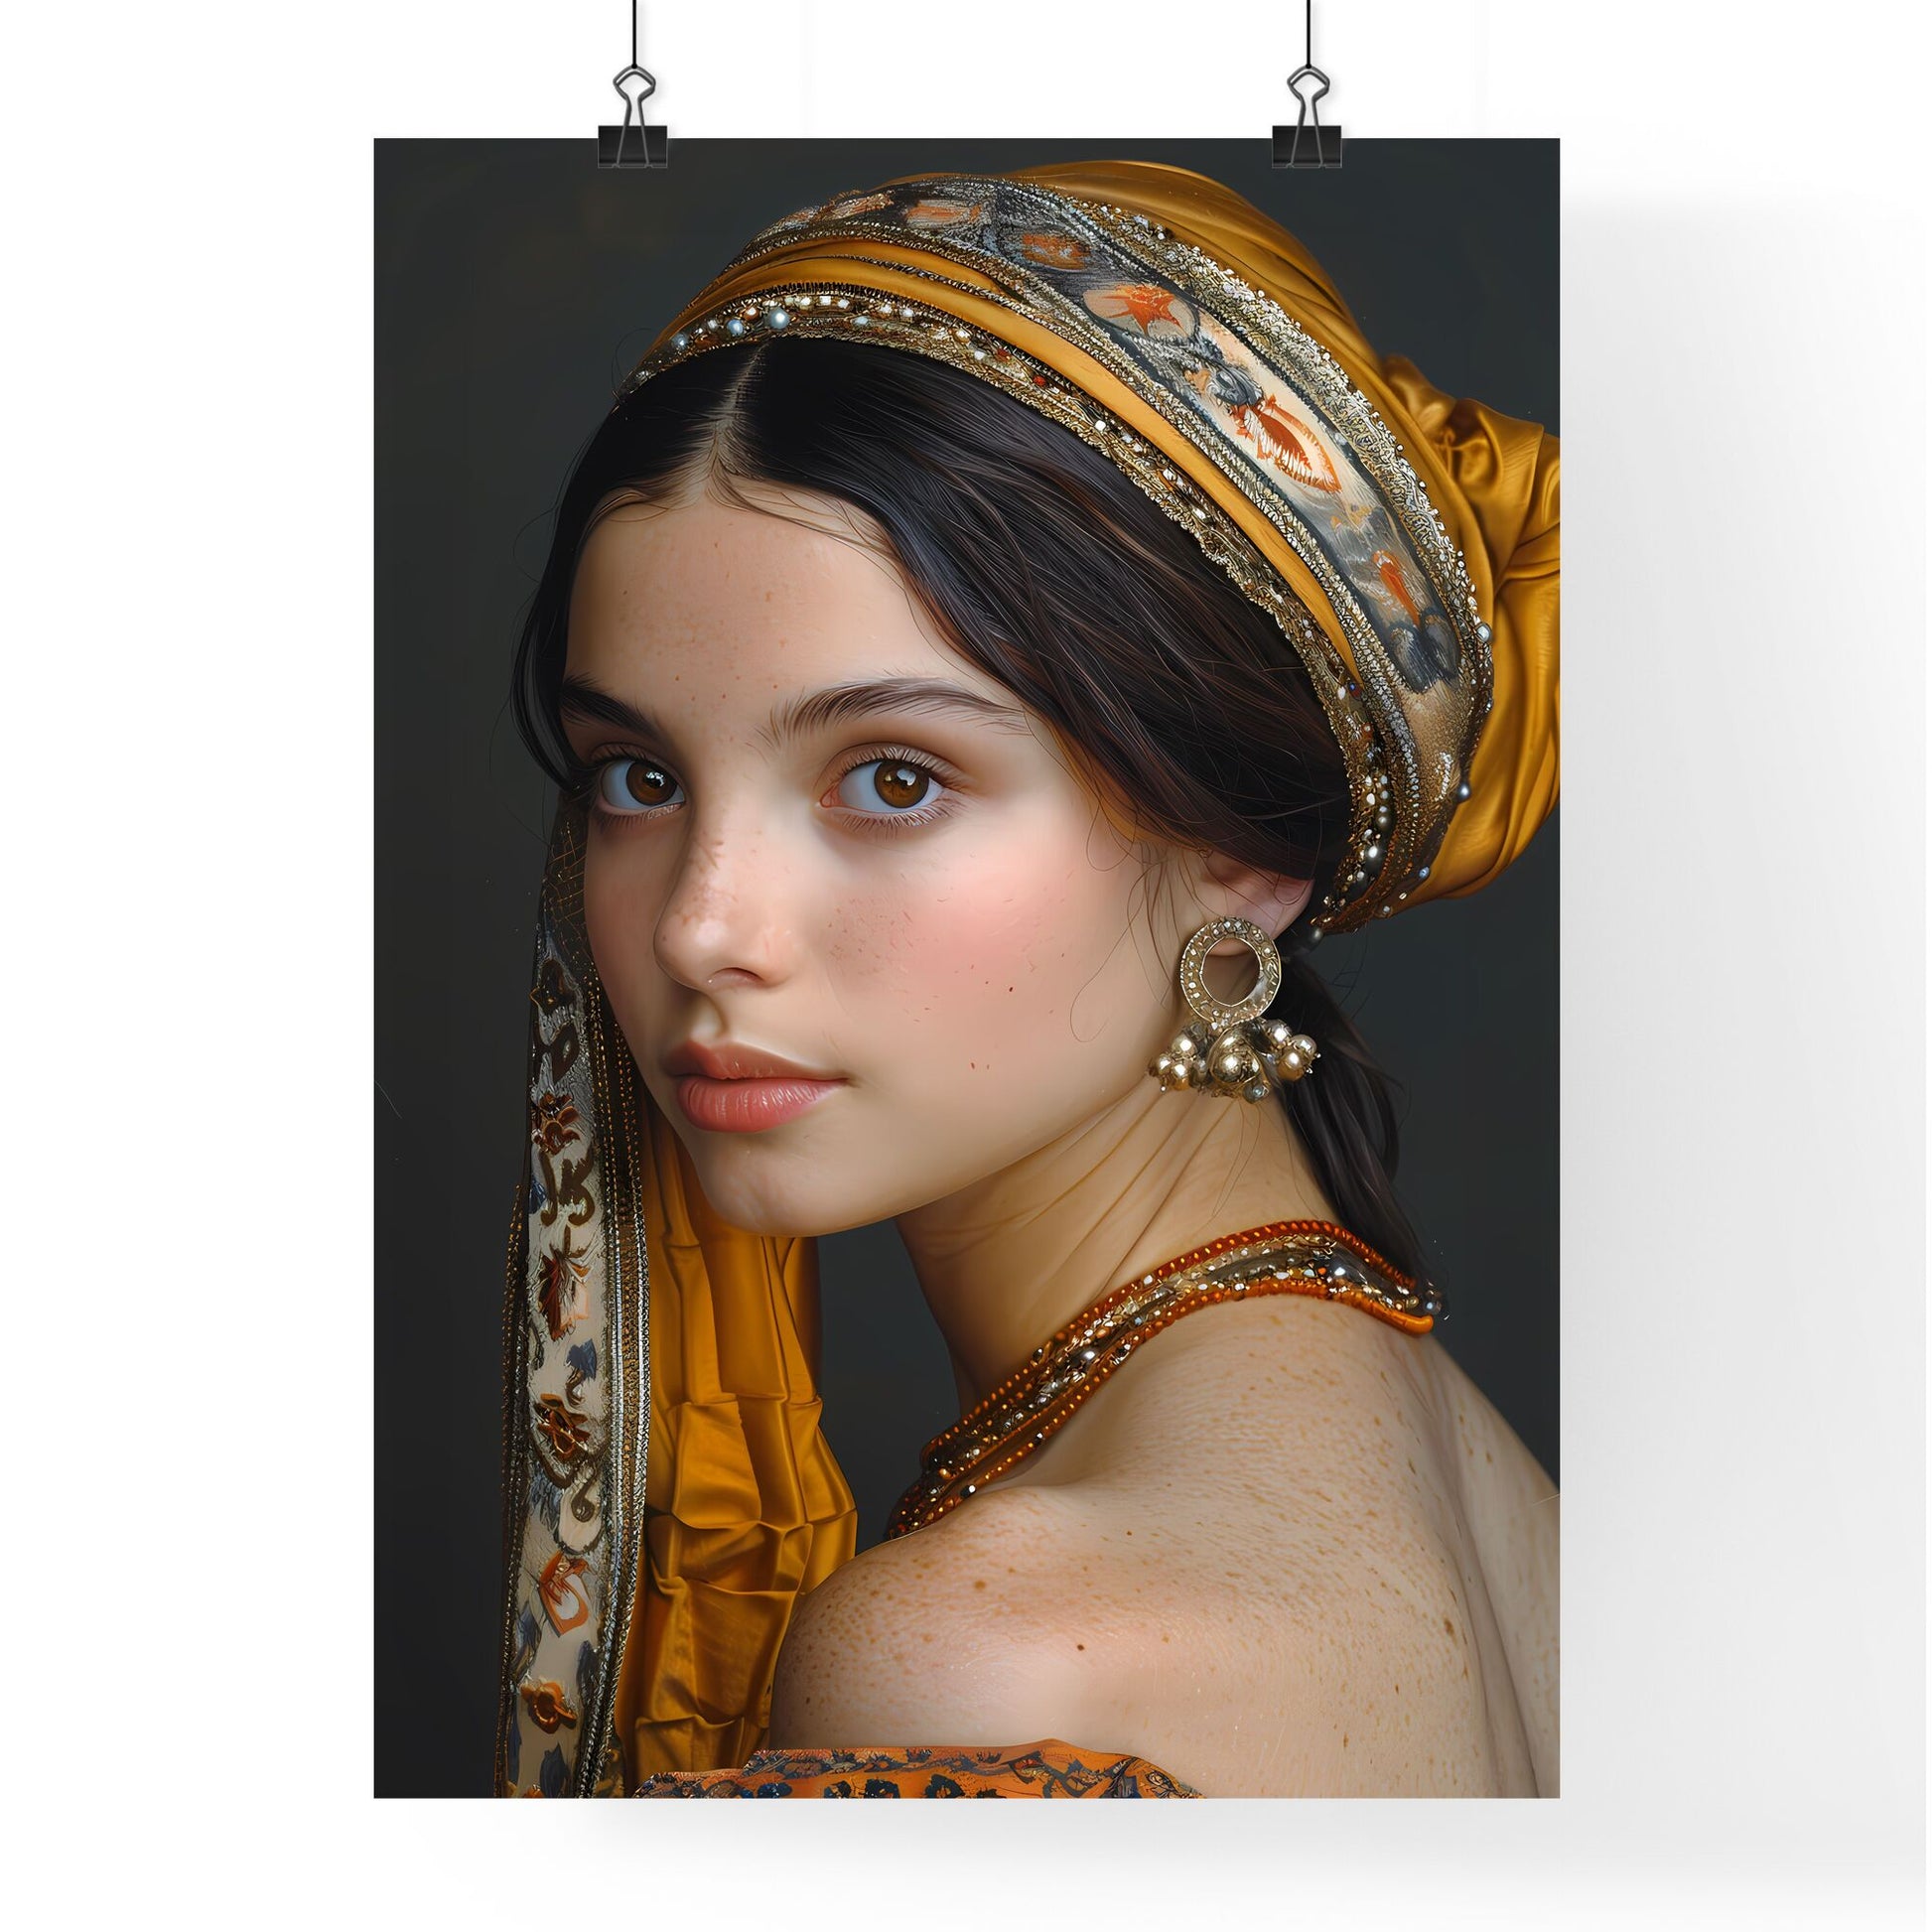 Intricate Spanish Noblewoman Portrait, 17th Century, Blue and Gold Costume, Intelligent Gaze, Long Hair, Headscarf, Earrings, Renaissance Art Default Title